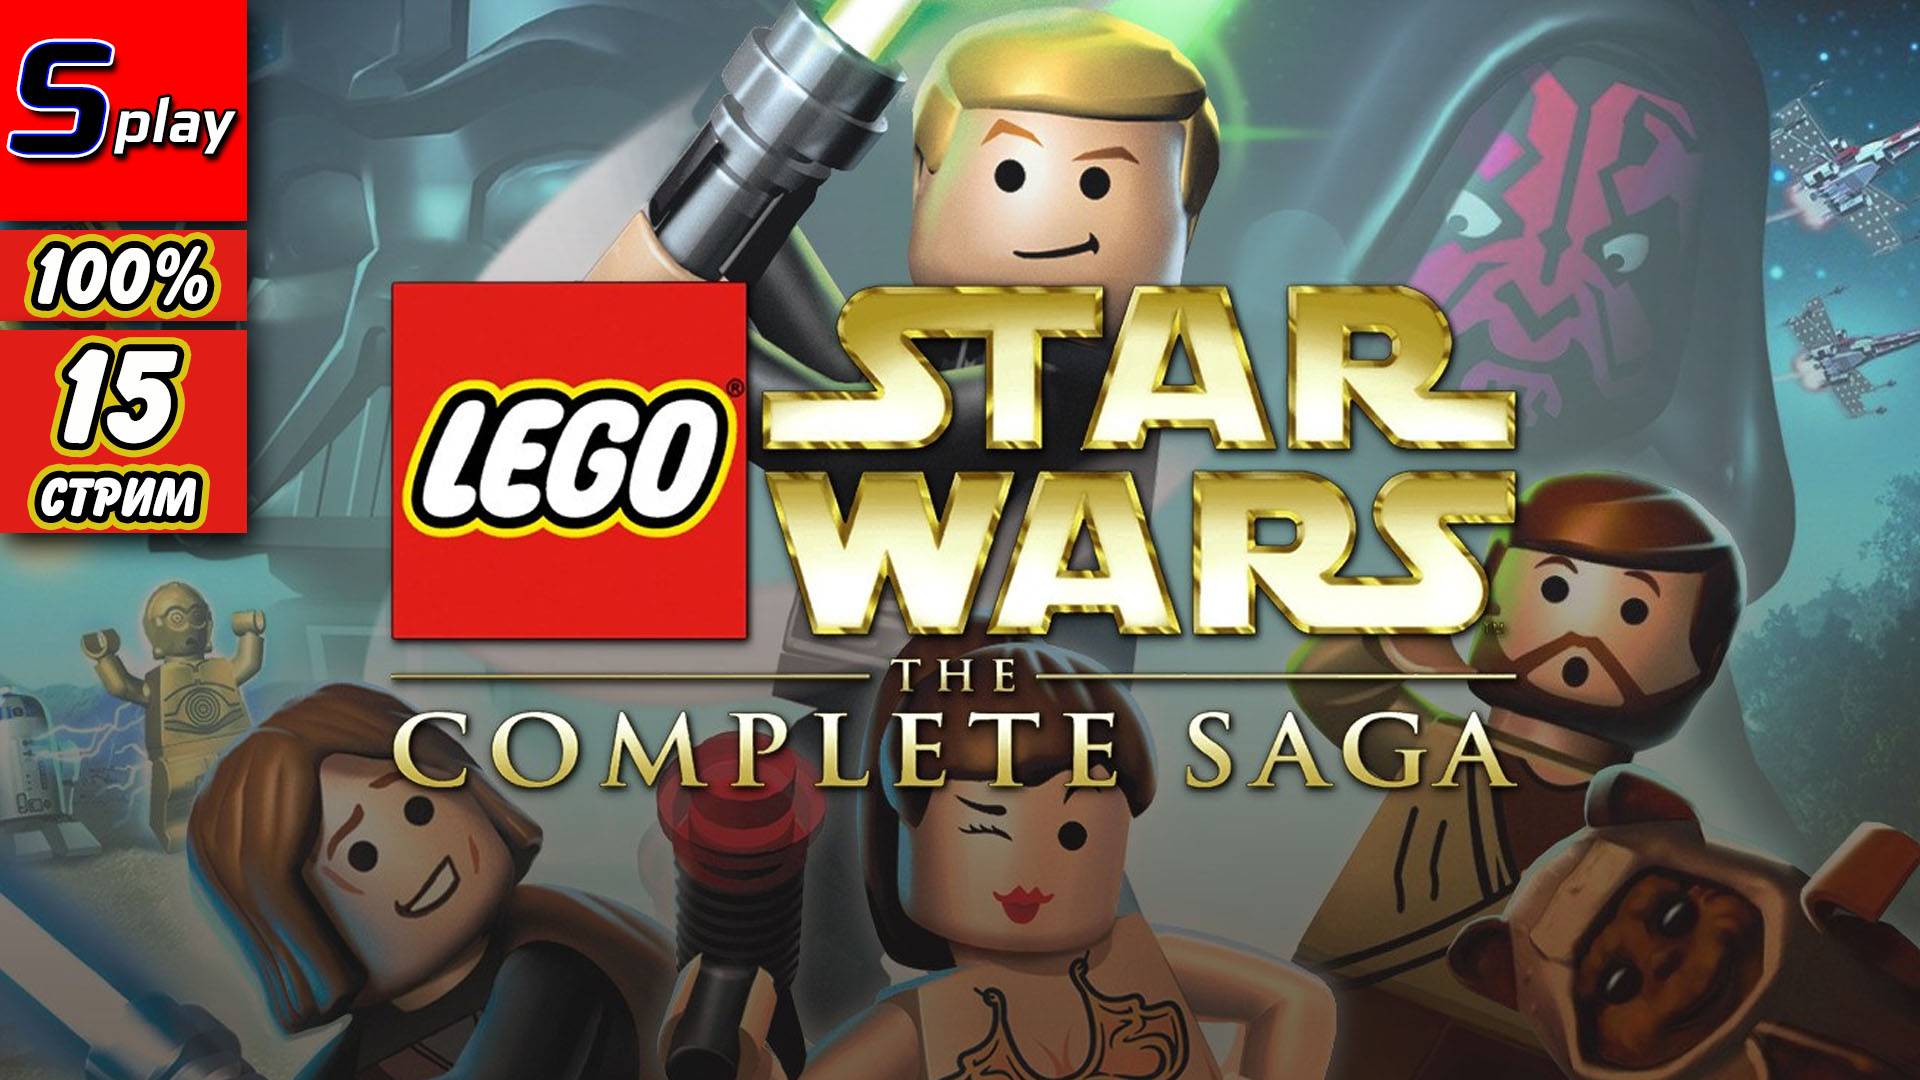 Lego Star Wars The Complete Saga на 100% - [15-стрим] - Собирательство